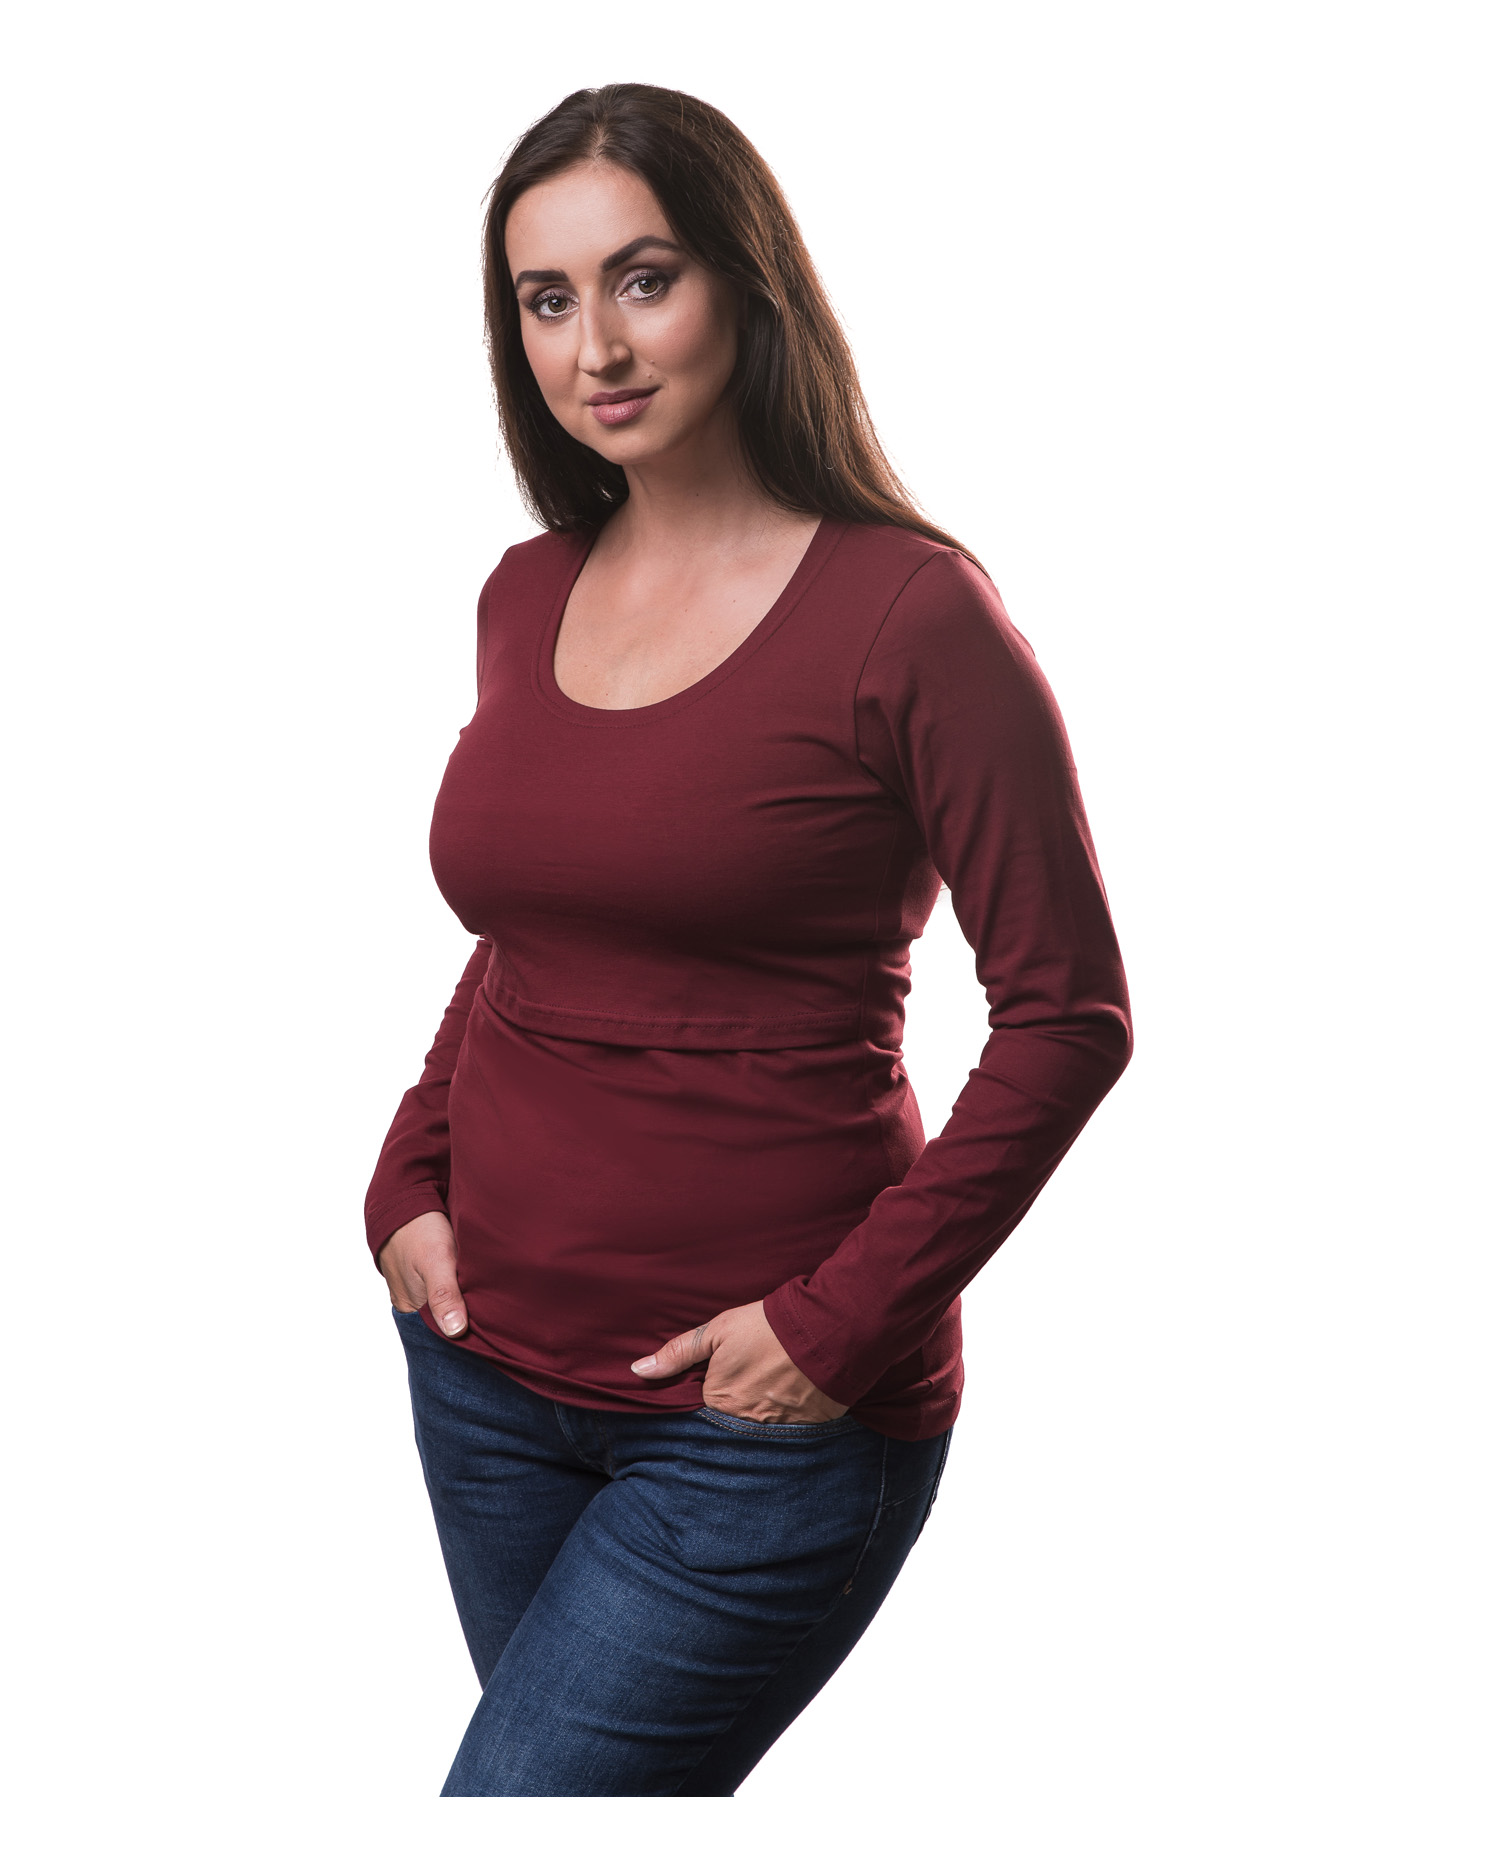 Breast-feeding T-shirt Katerina, long sleeves, wine red